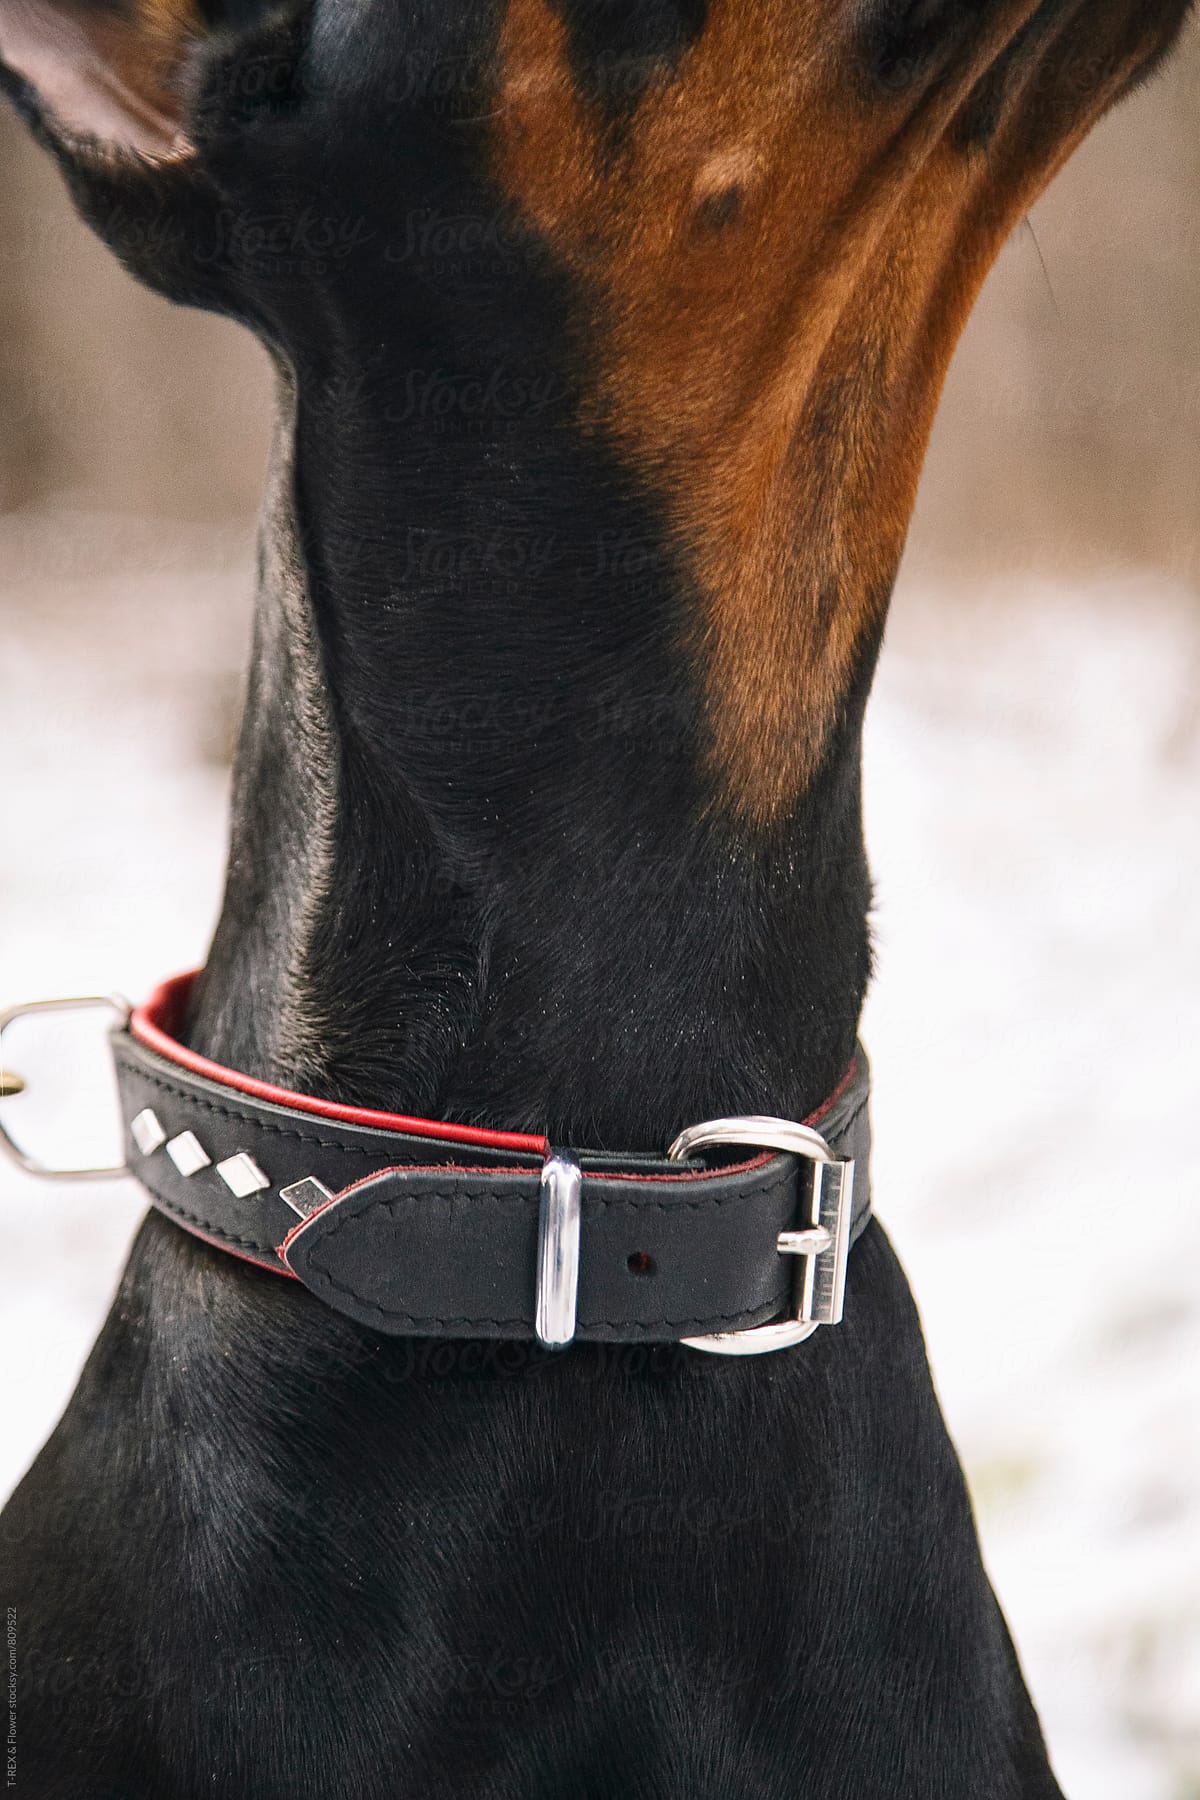 Dog's neck in dog collar